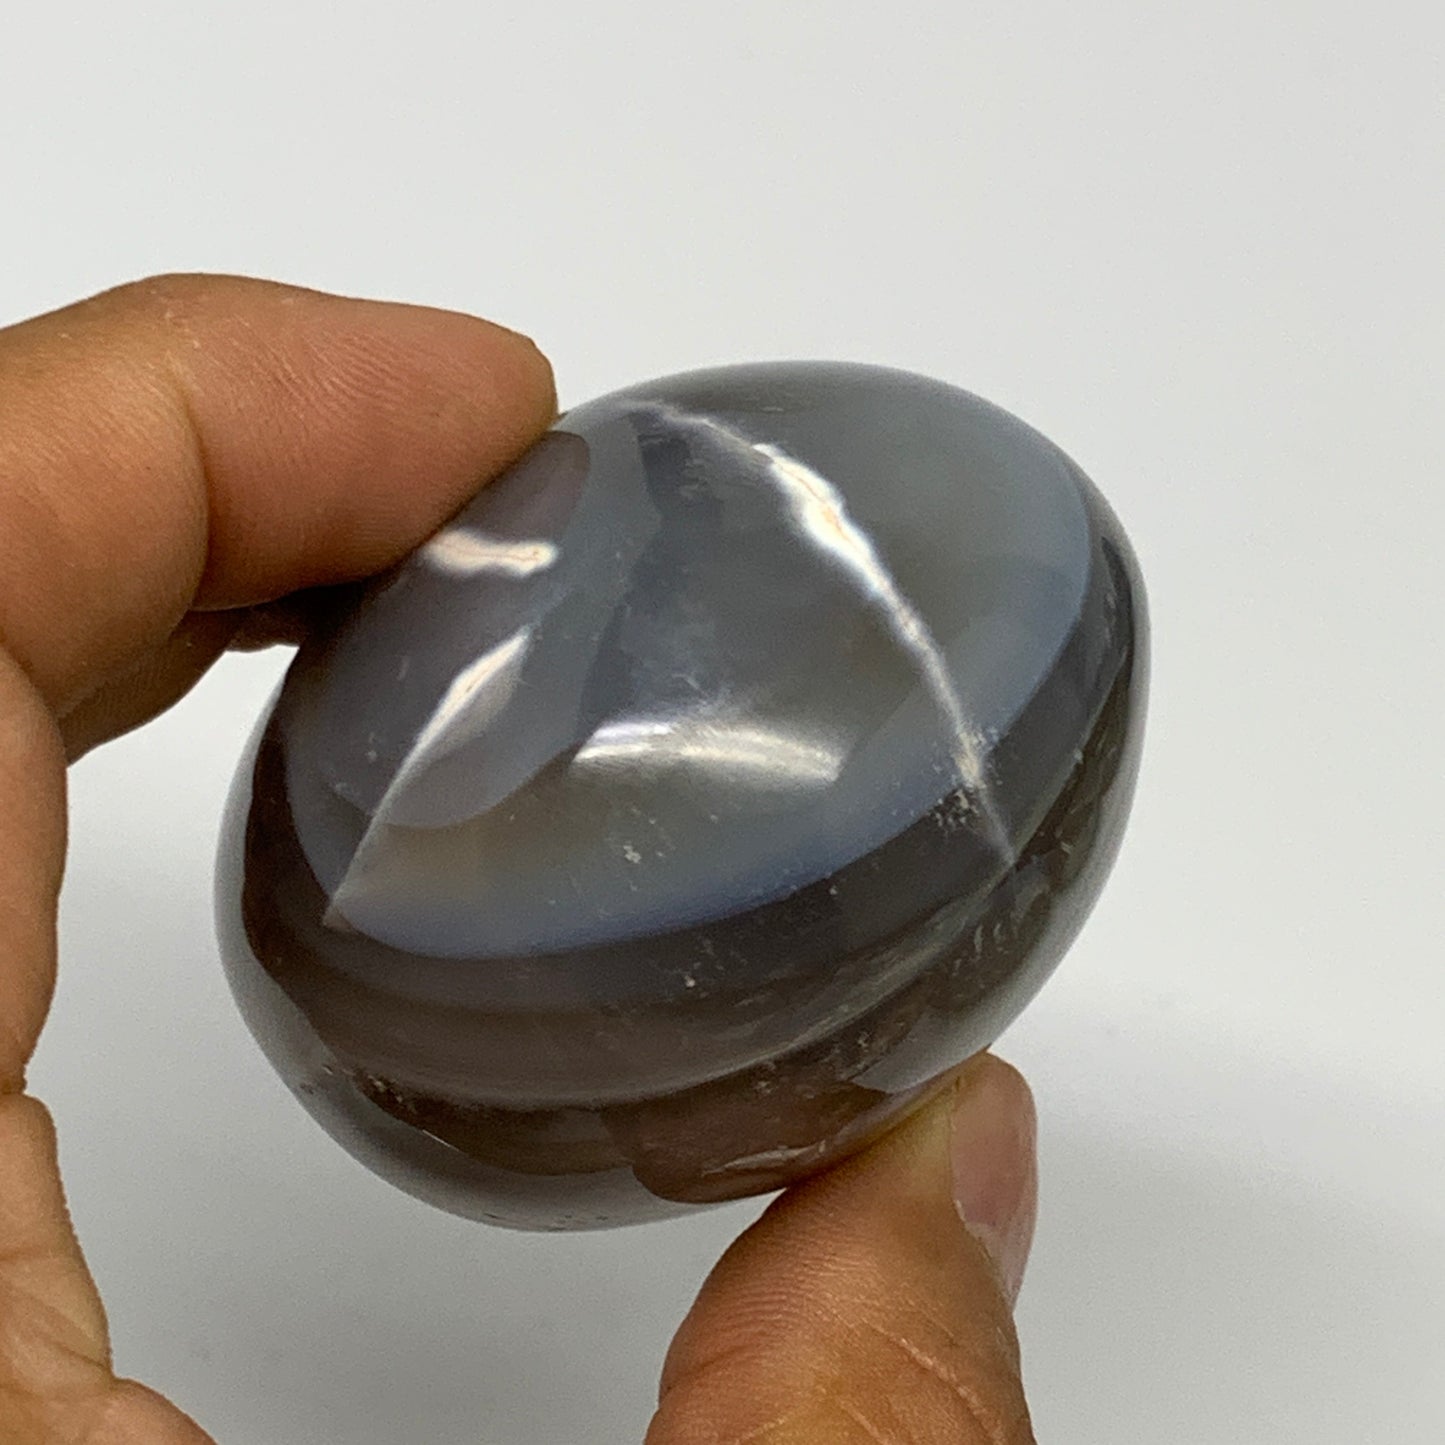 160.2g, 2.3"x2"x1.8" Orca Agate Palm-Stone Reiki Energy Crystal Reiki, B28692